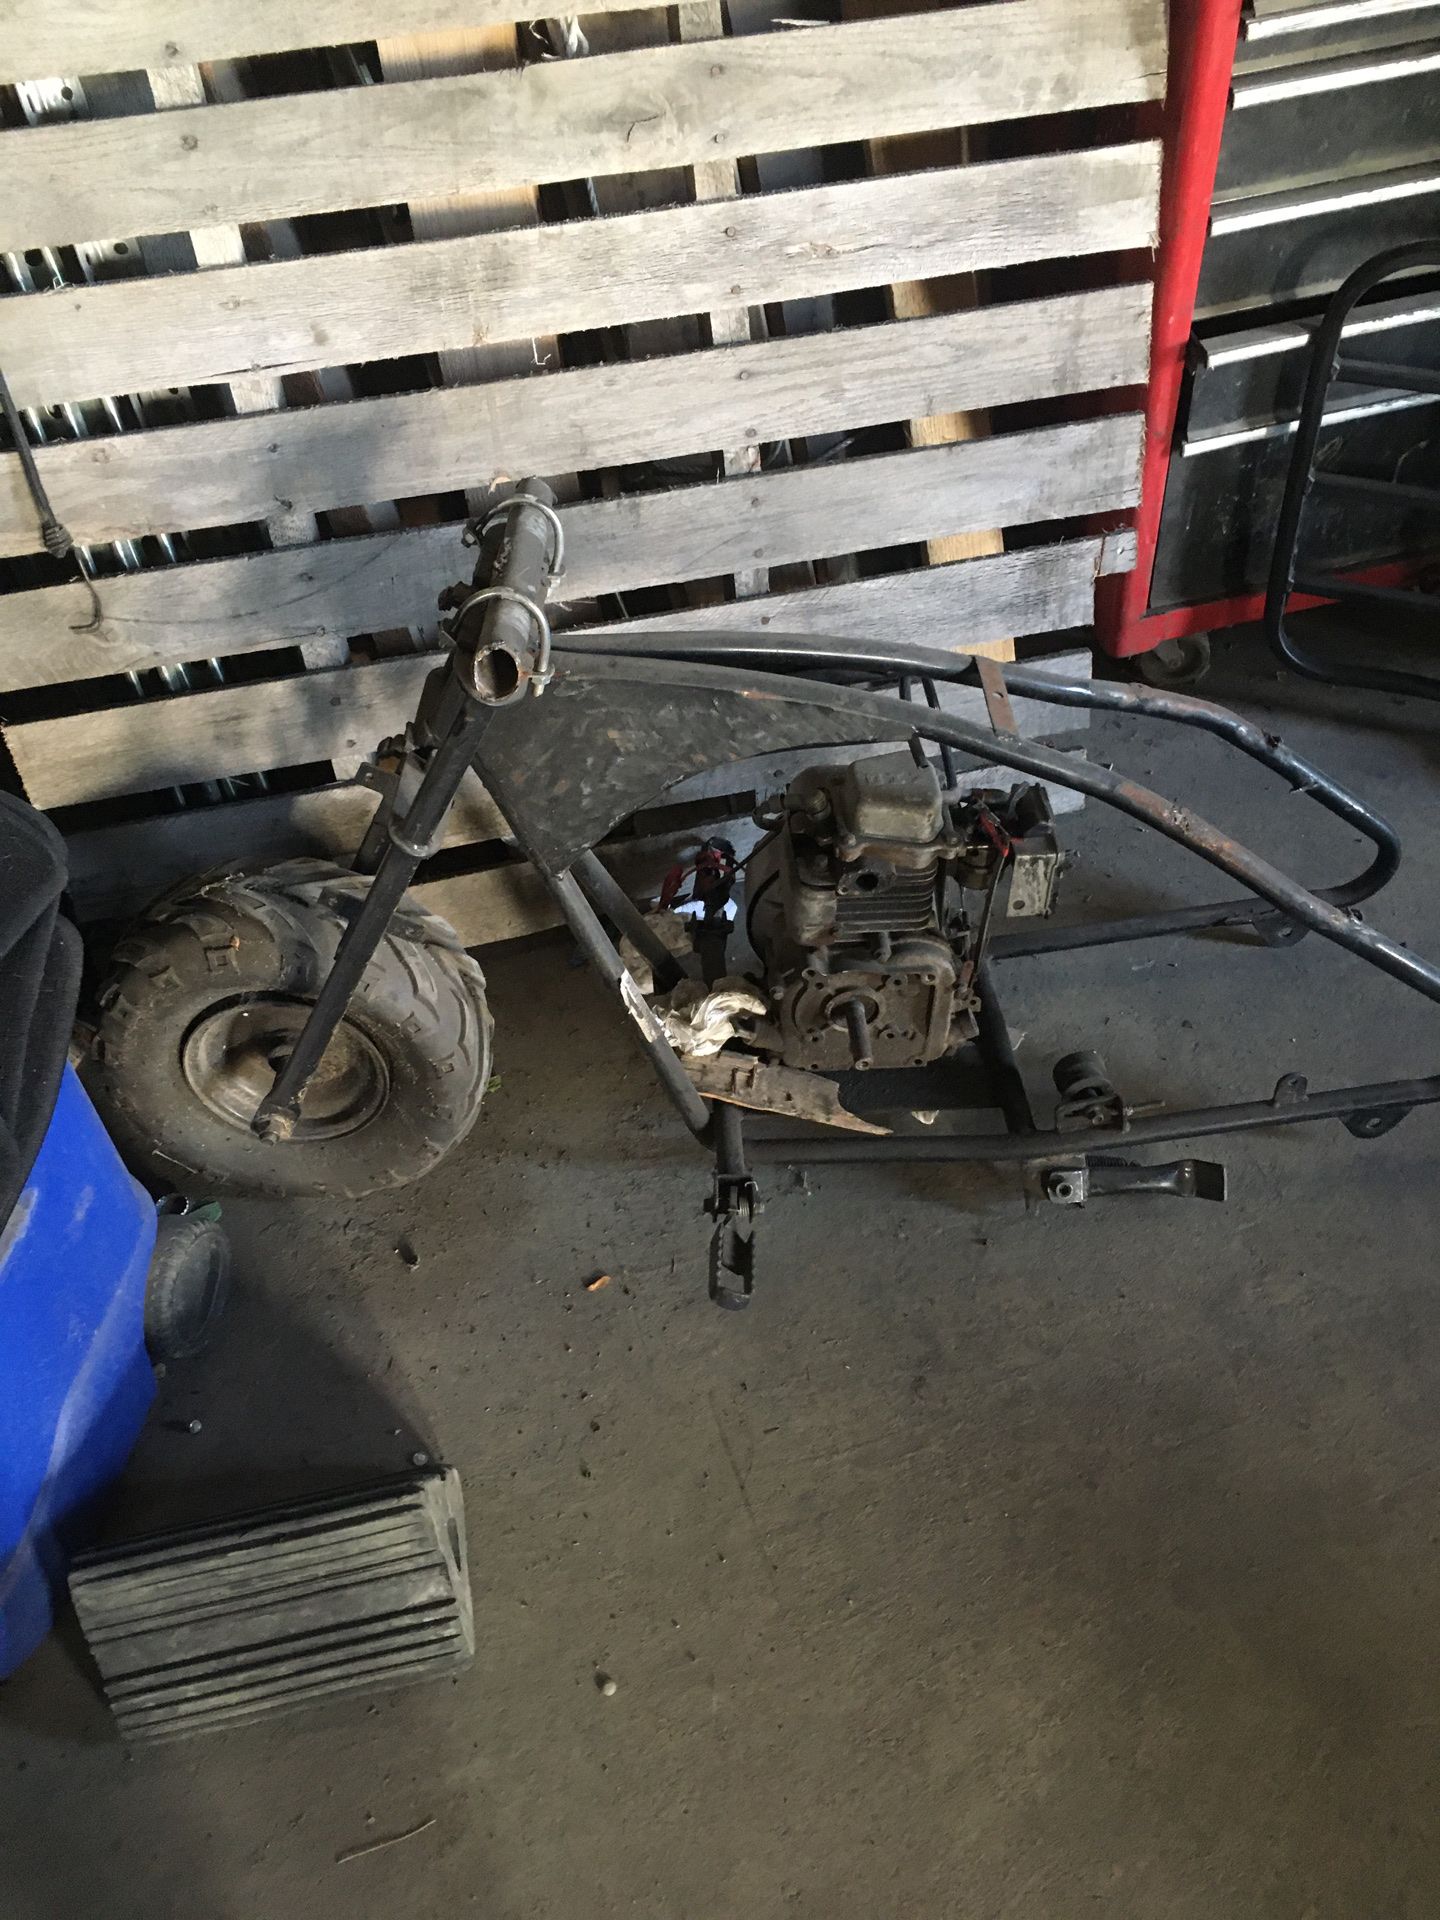 Mini bike frame. Motor may still work to